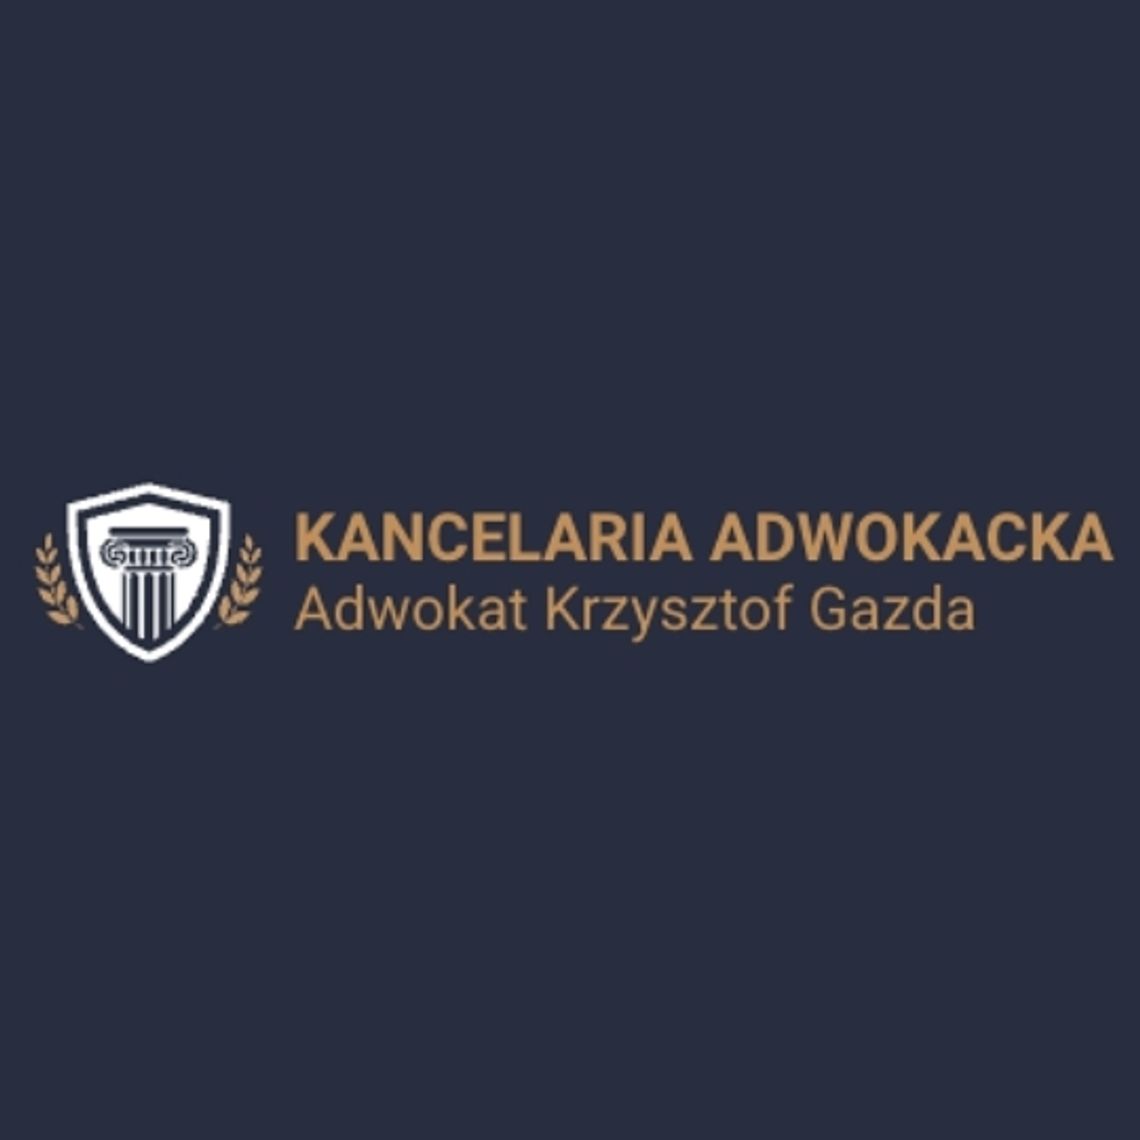 Adwokat Ełk - Krzysztof Gazda - Kancelaria Adwokacka